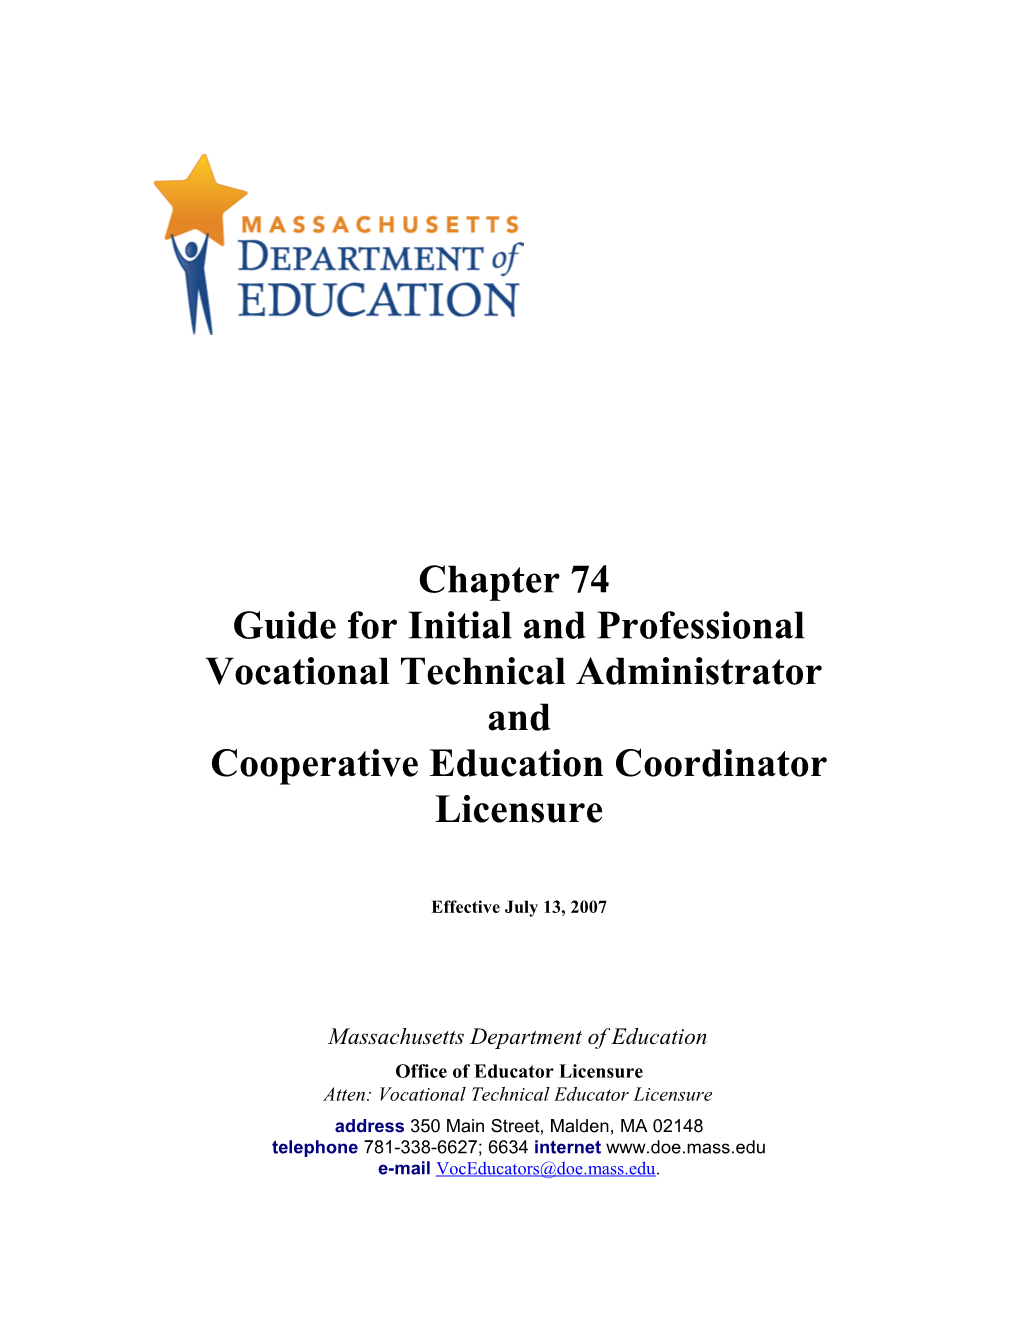 Ch. 74 Guide for Initial & Profess. Voc Tech Admin & Cooperative Ed Coordinator Licensure